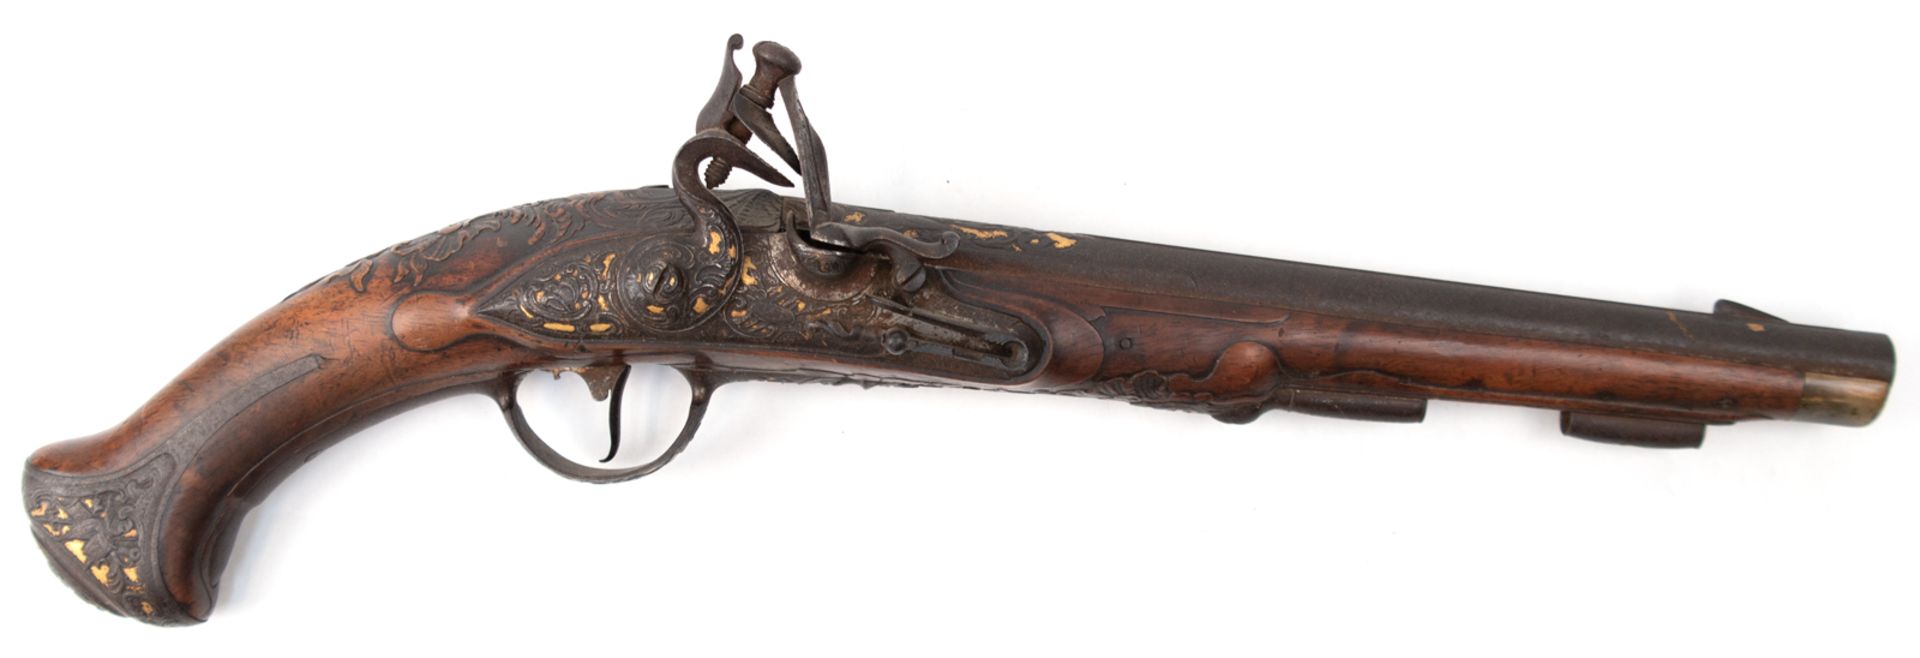 Steinschloßpistole, 18. Jh., nicht funktionstüchtig, Schloß defekt, starke Gebrauchspuren, L. 43 cm - Image 2 of 2